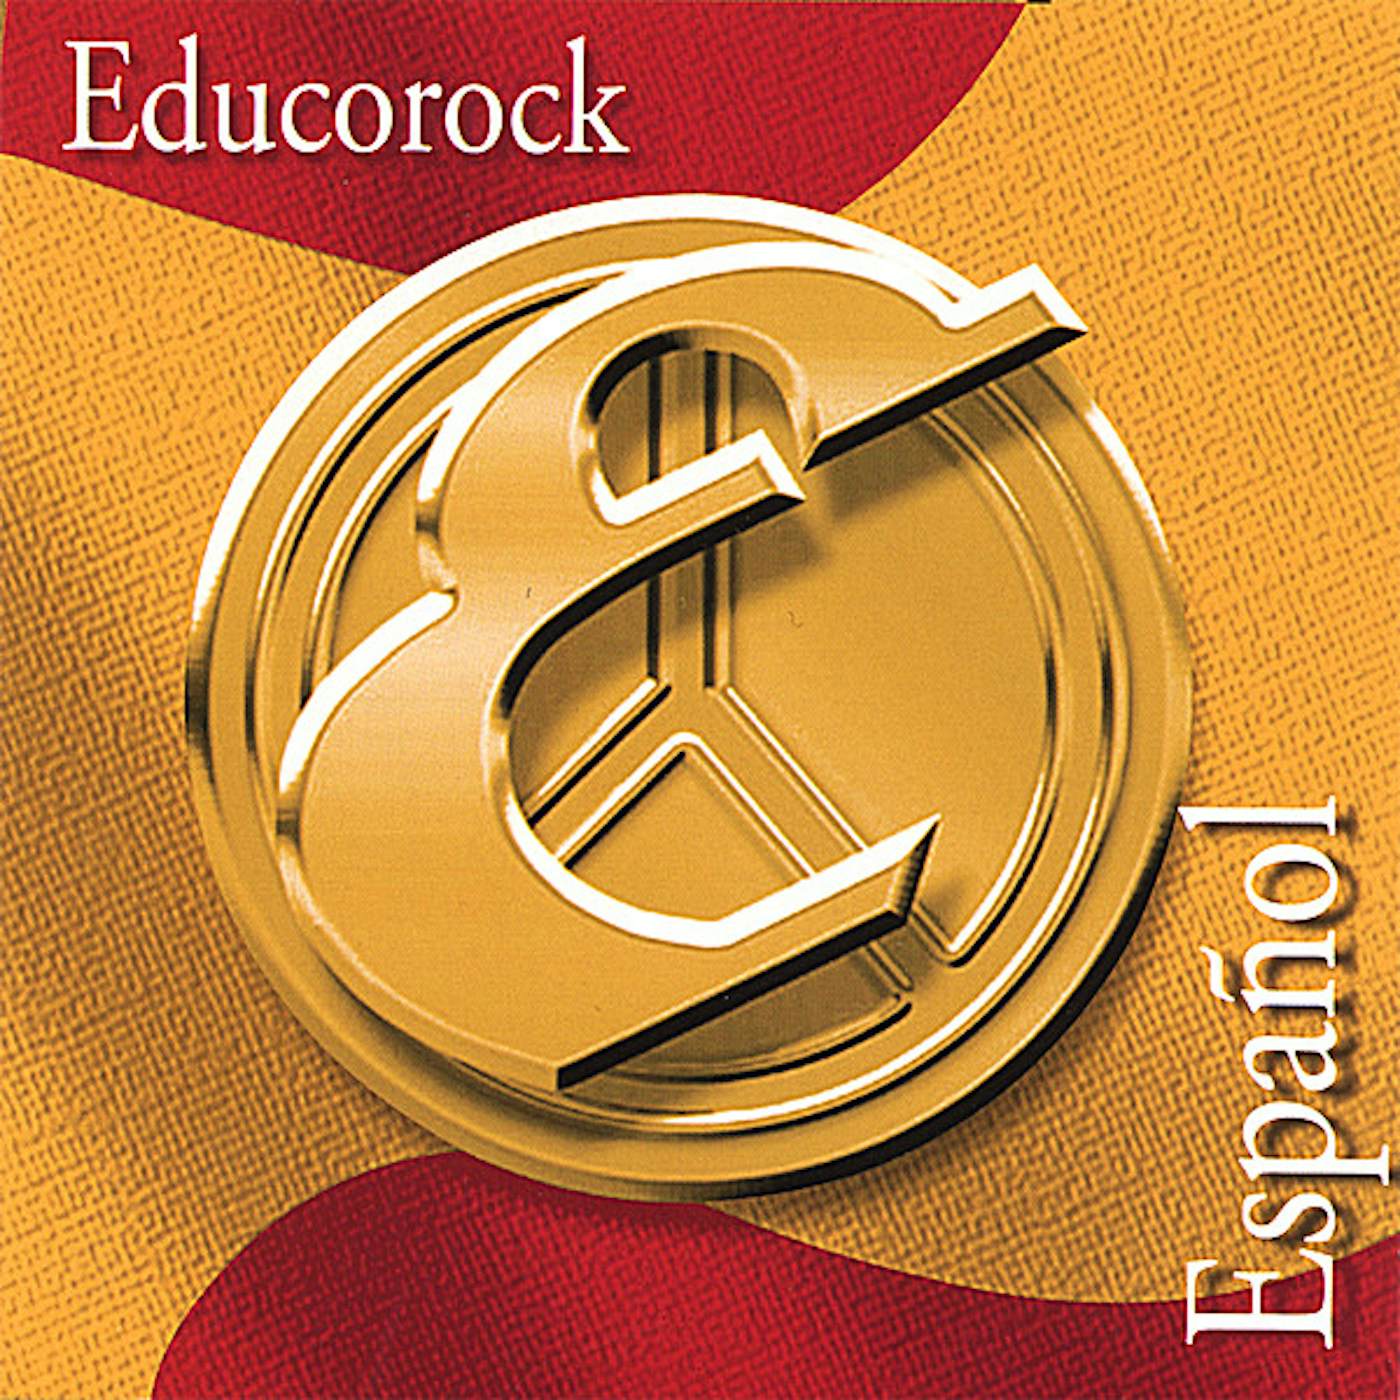 Etienne EDUCOROCK ESPANOL CD